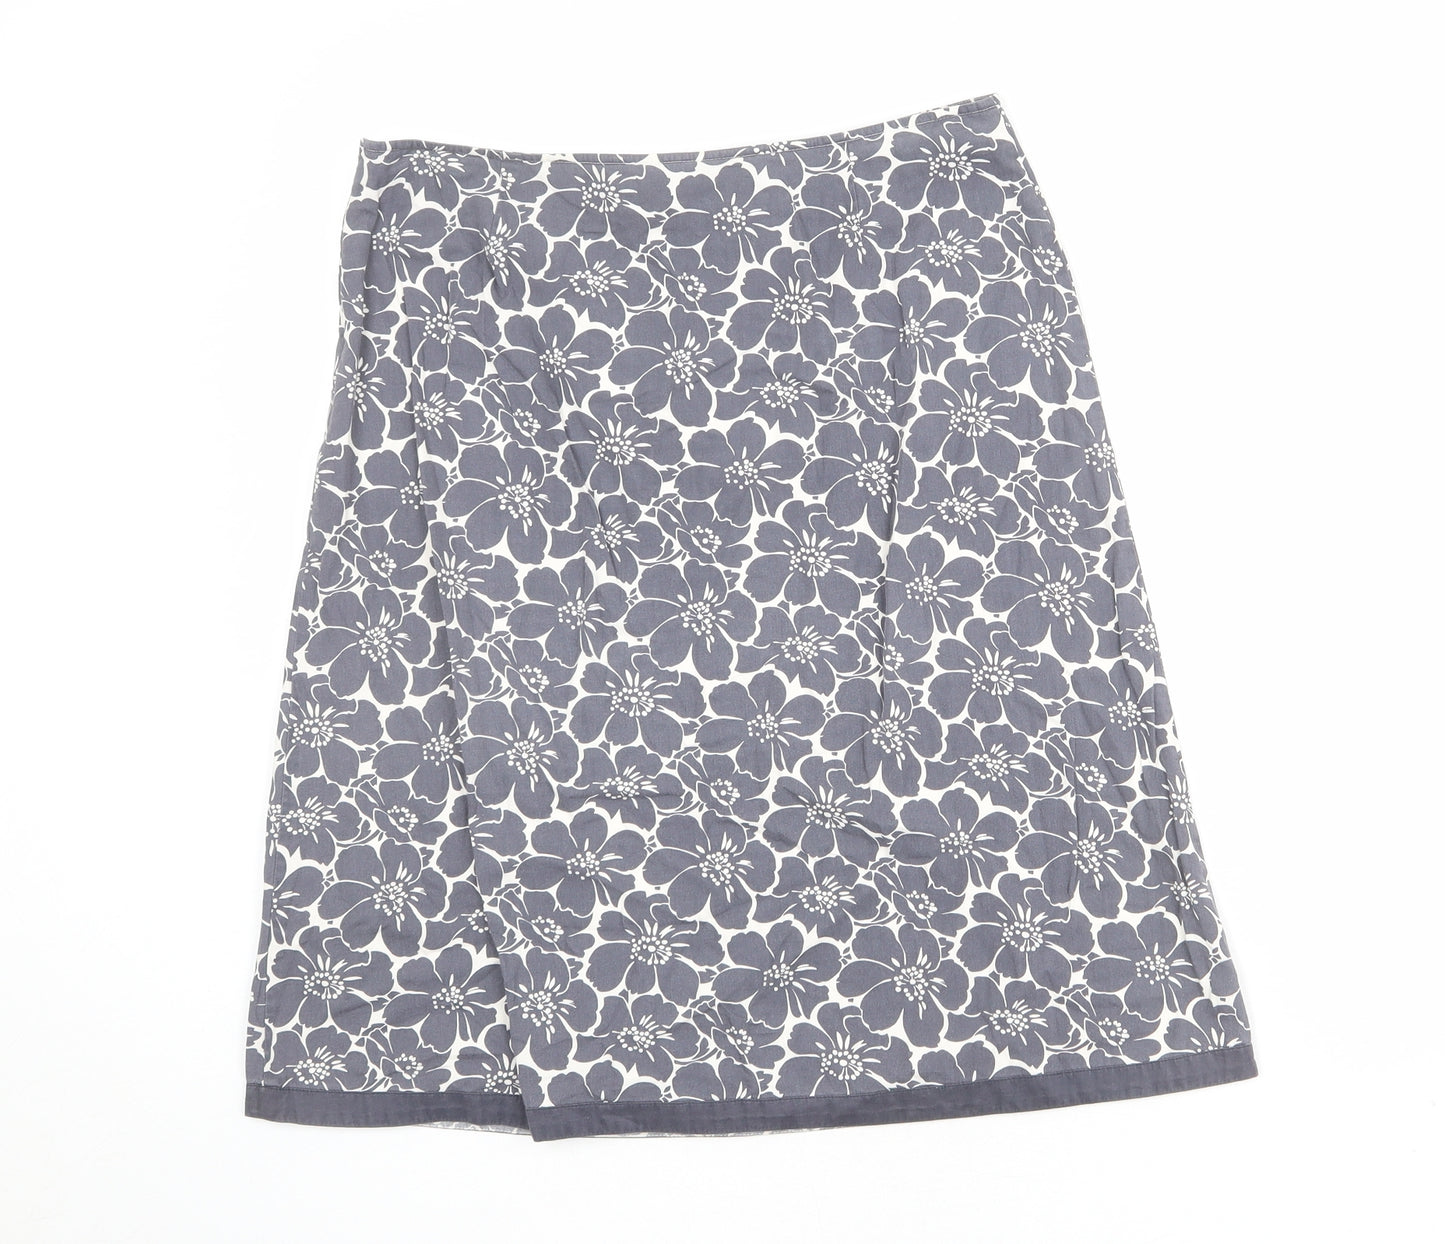 Boden Womens Grey Floral Cotton A-Line Skirt Size 10 Zip